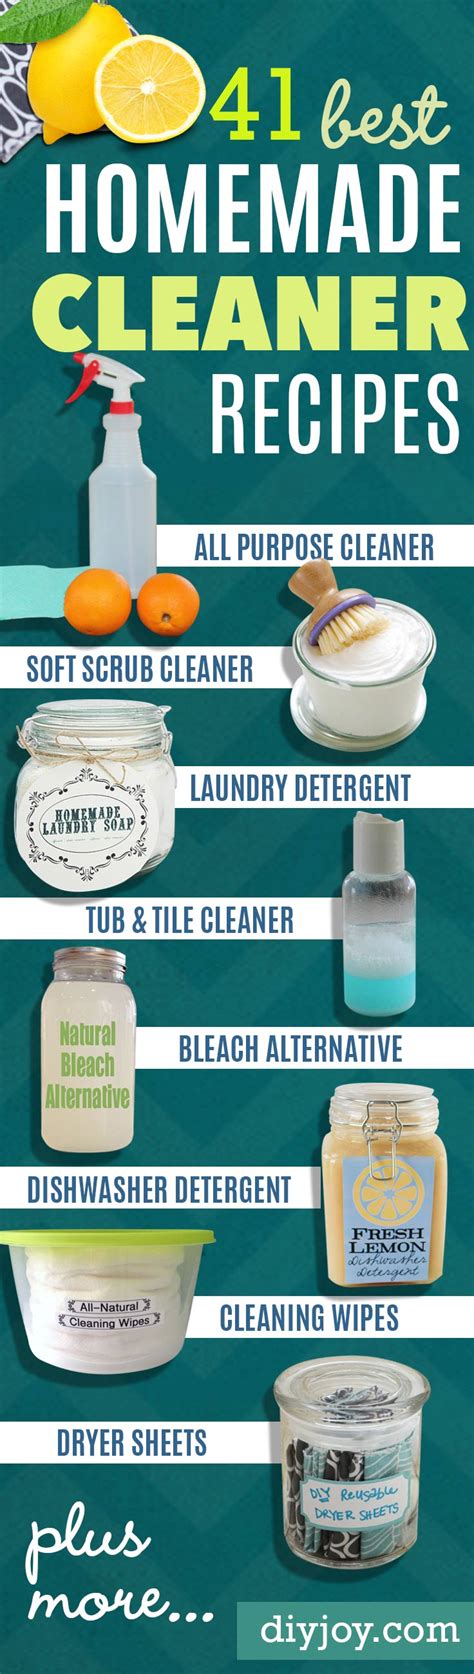 Homemade Bathroom Floor Cleaner Clsa Flooring Guide